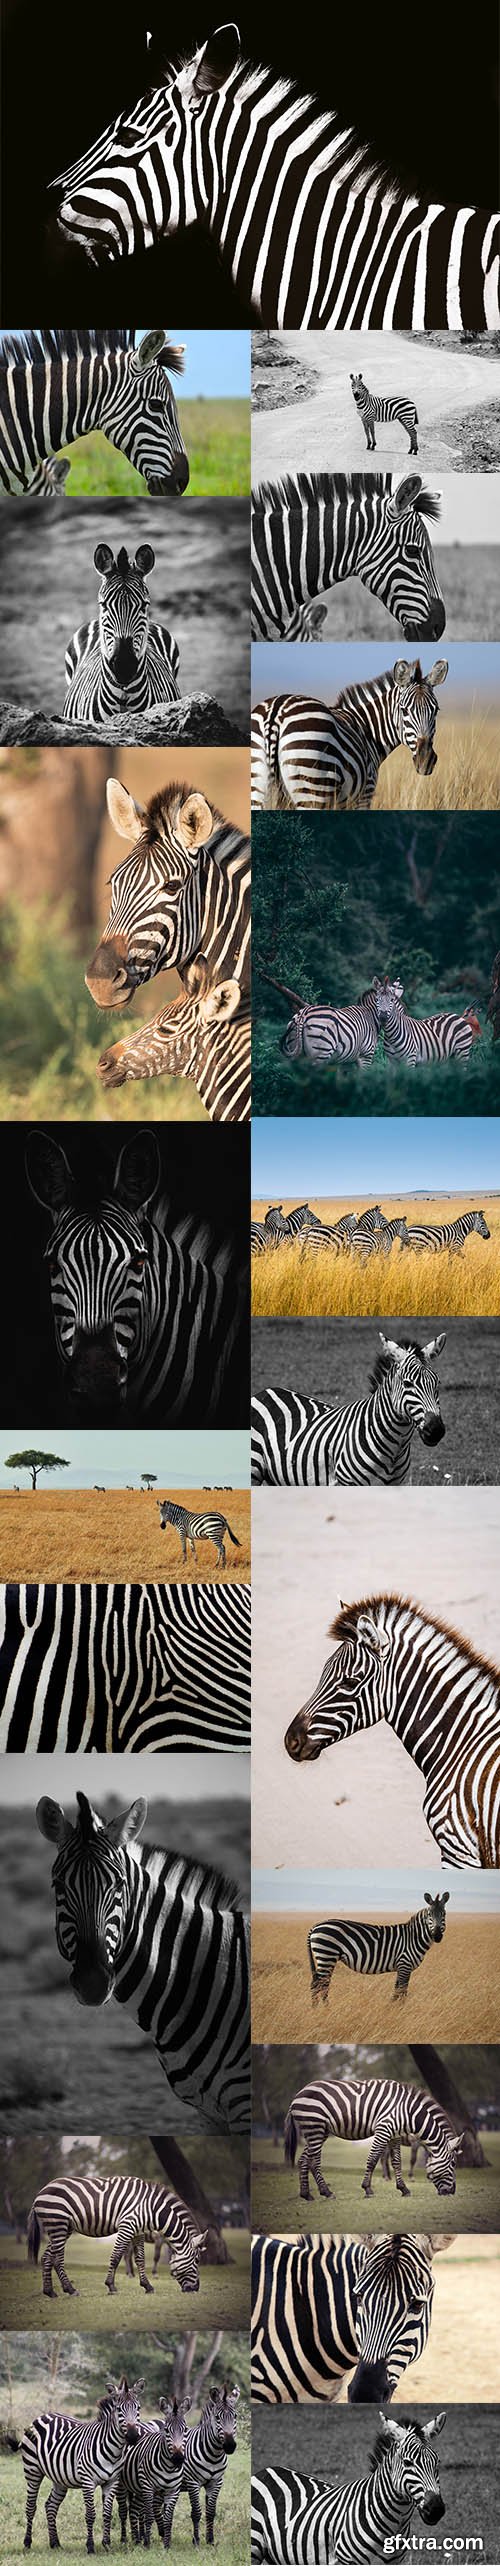 Zebra Bundle - Premium UHQ Stock Photo